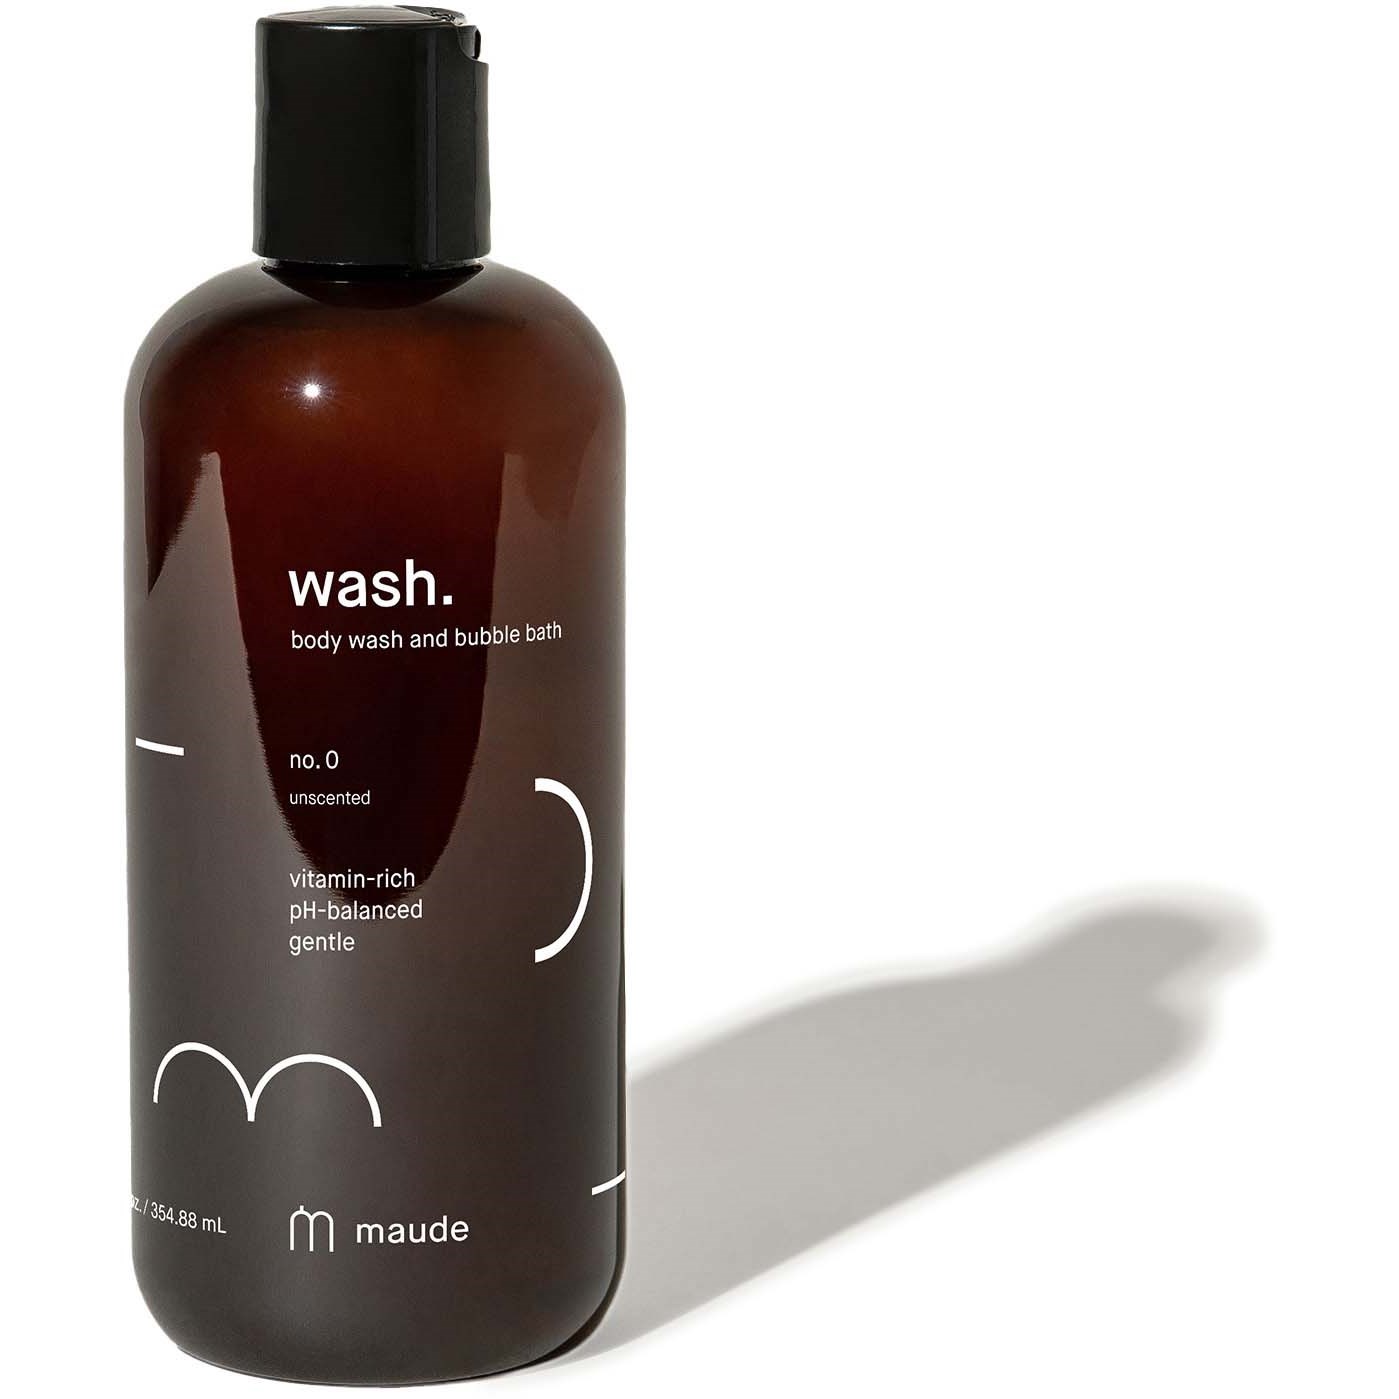 maude Wash. Body Wash and Bubble Bath No. 0 Unscented 354 ml